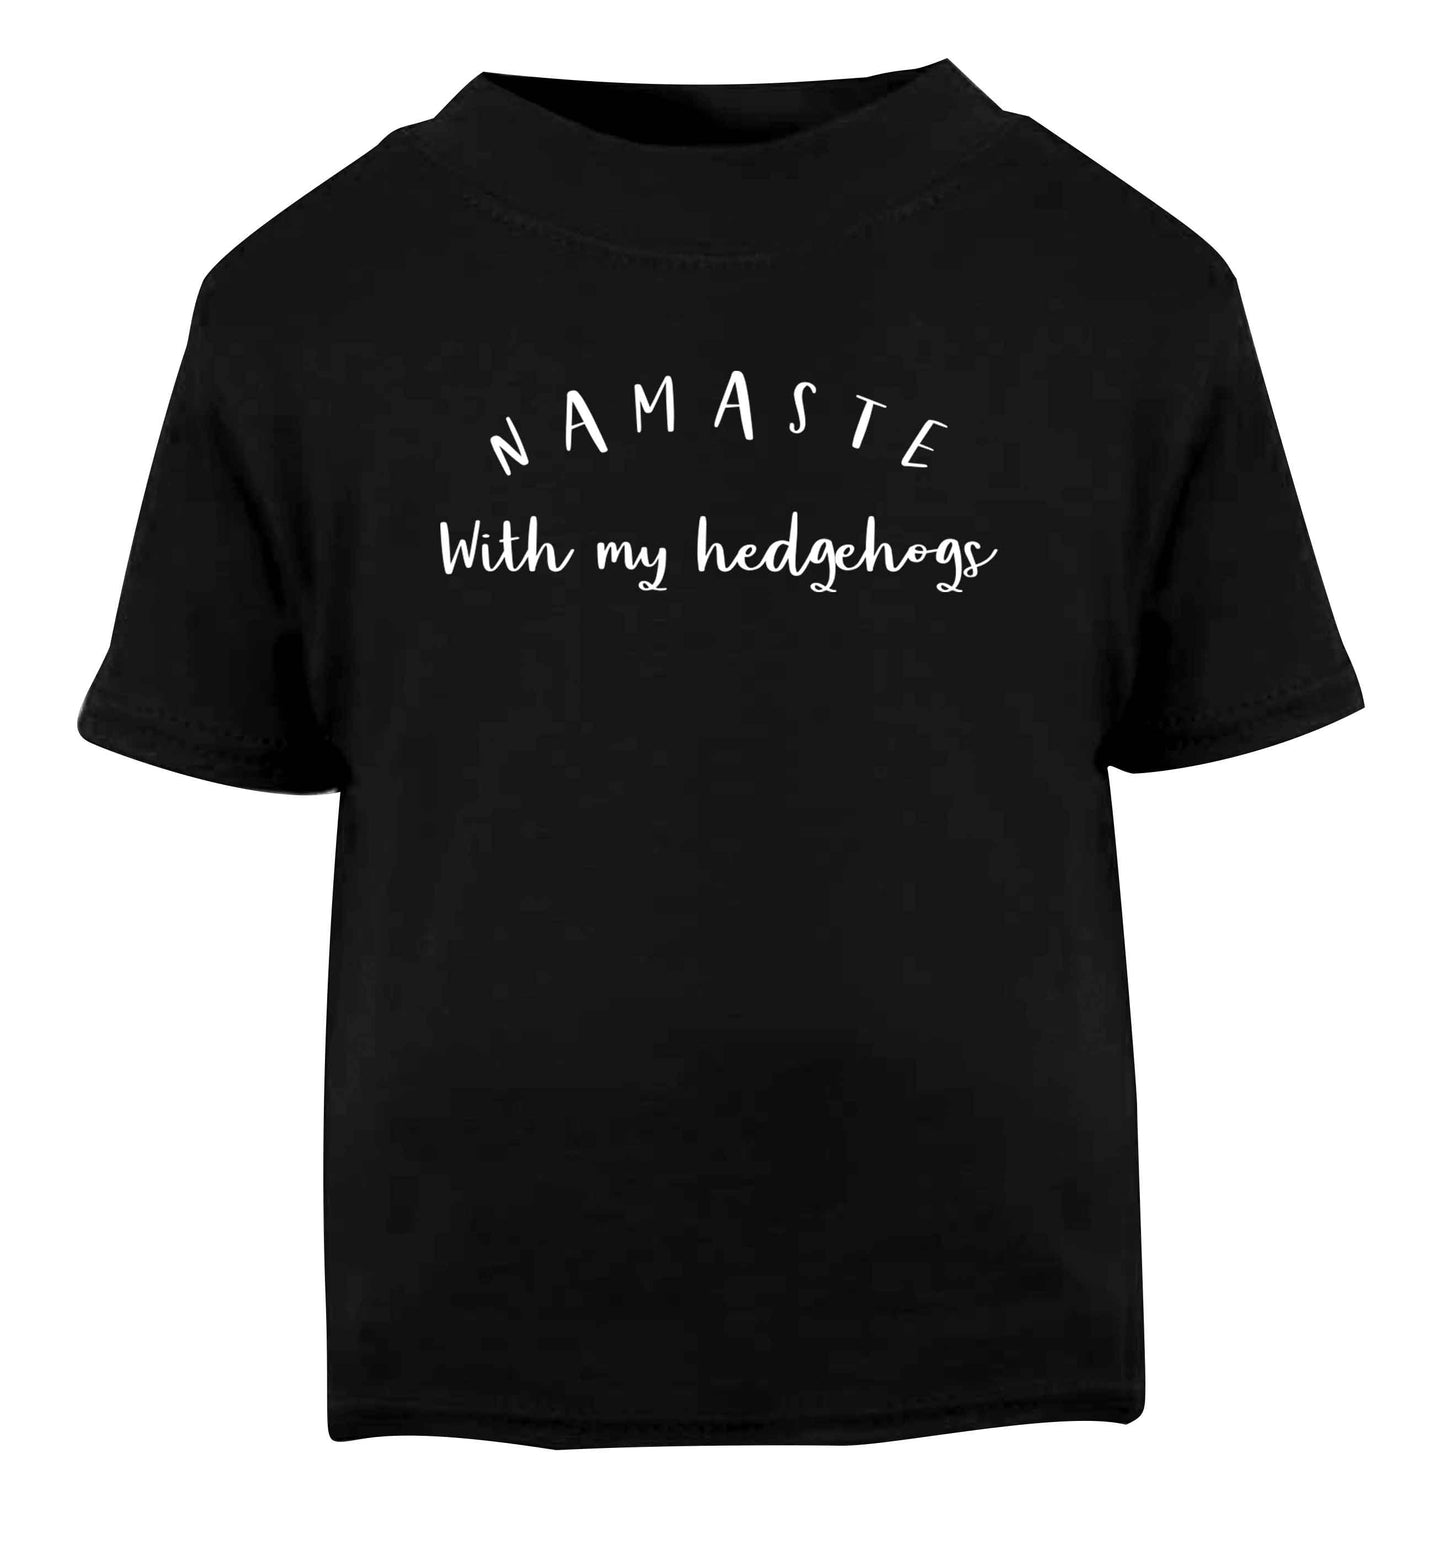 Namaste with my hedgehog Black Baby Toddler Tshirt 2 years